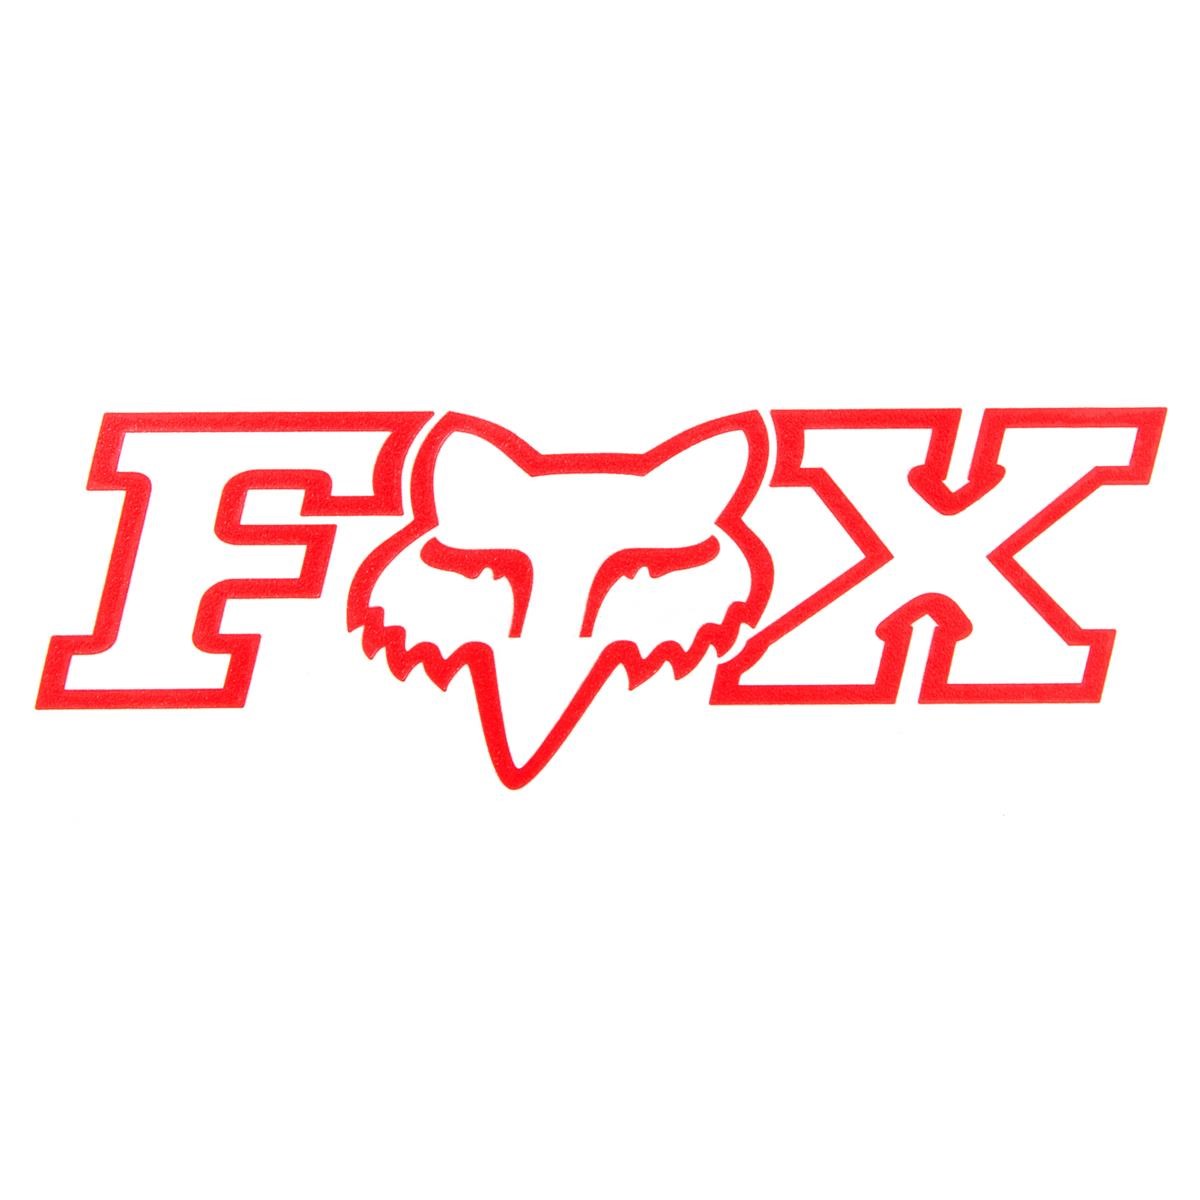 Fox Sticker Corporate TDC Red - 18 cm